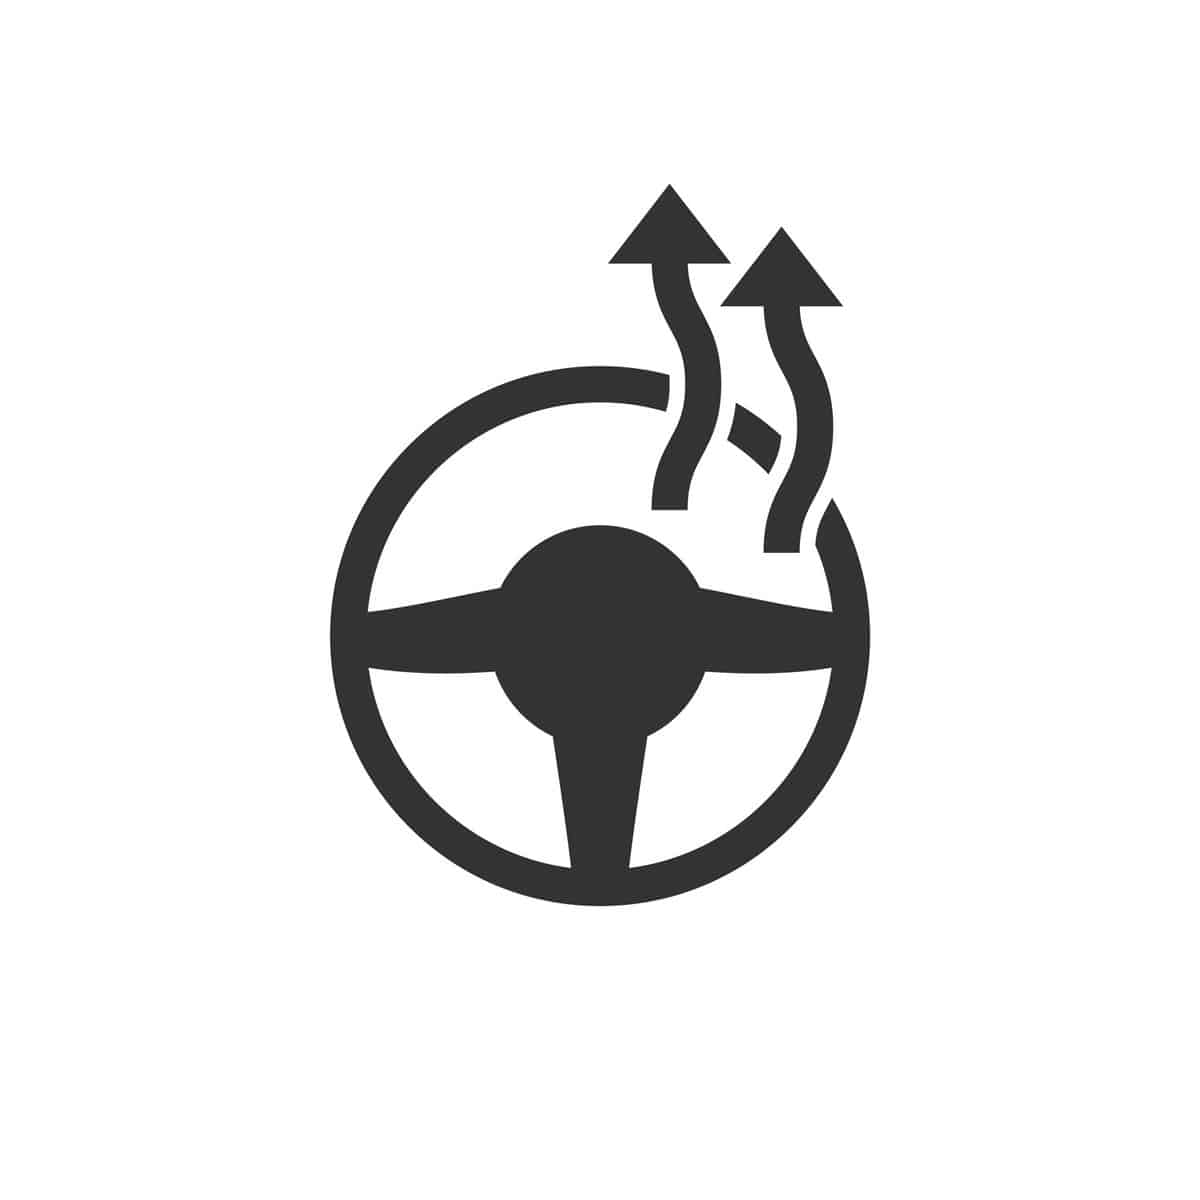 Steering wheel illustration